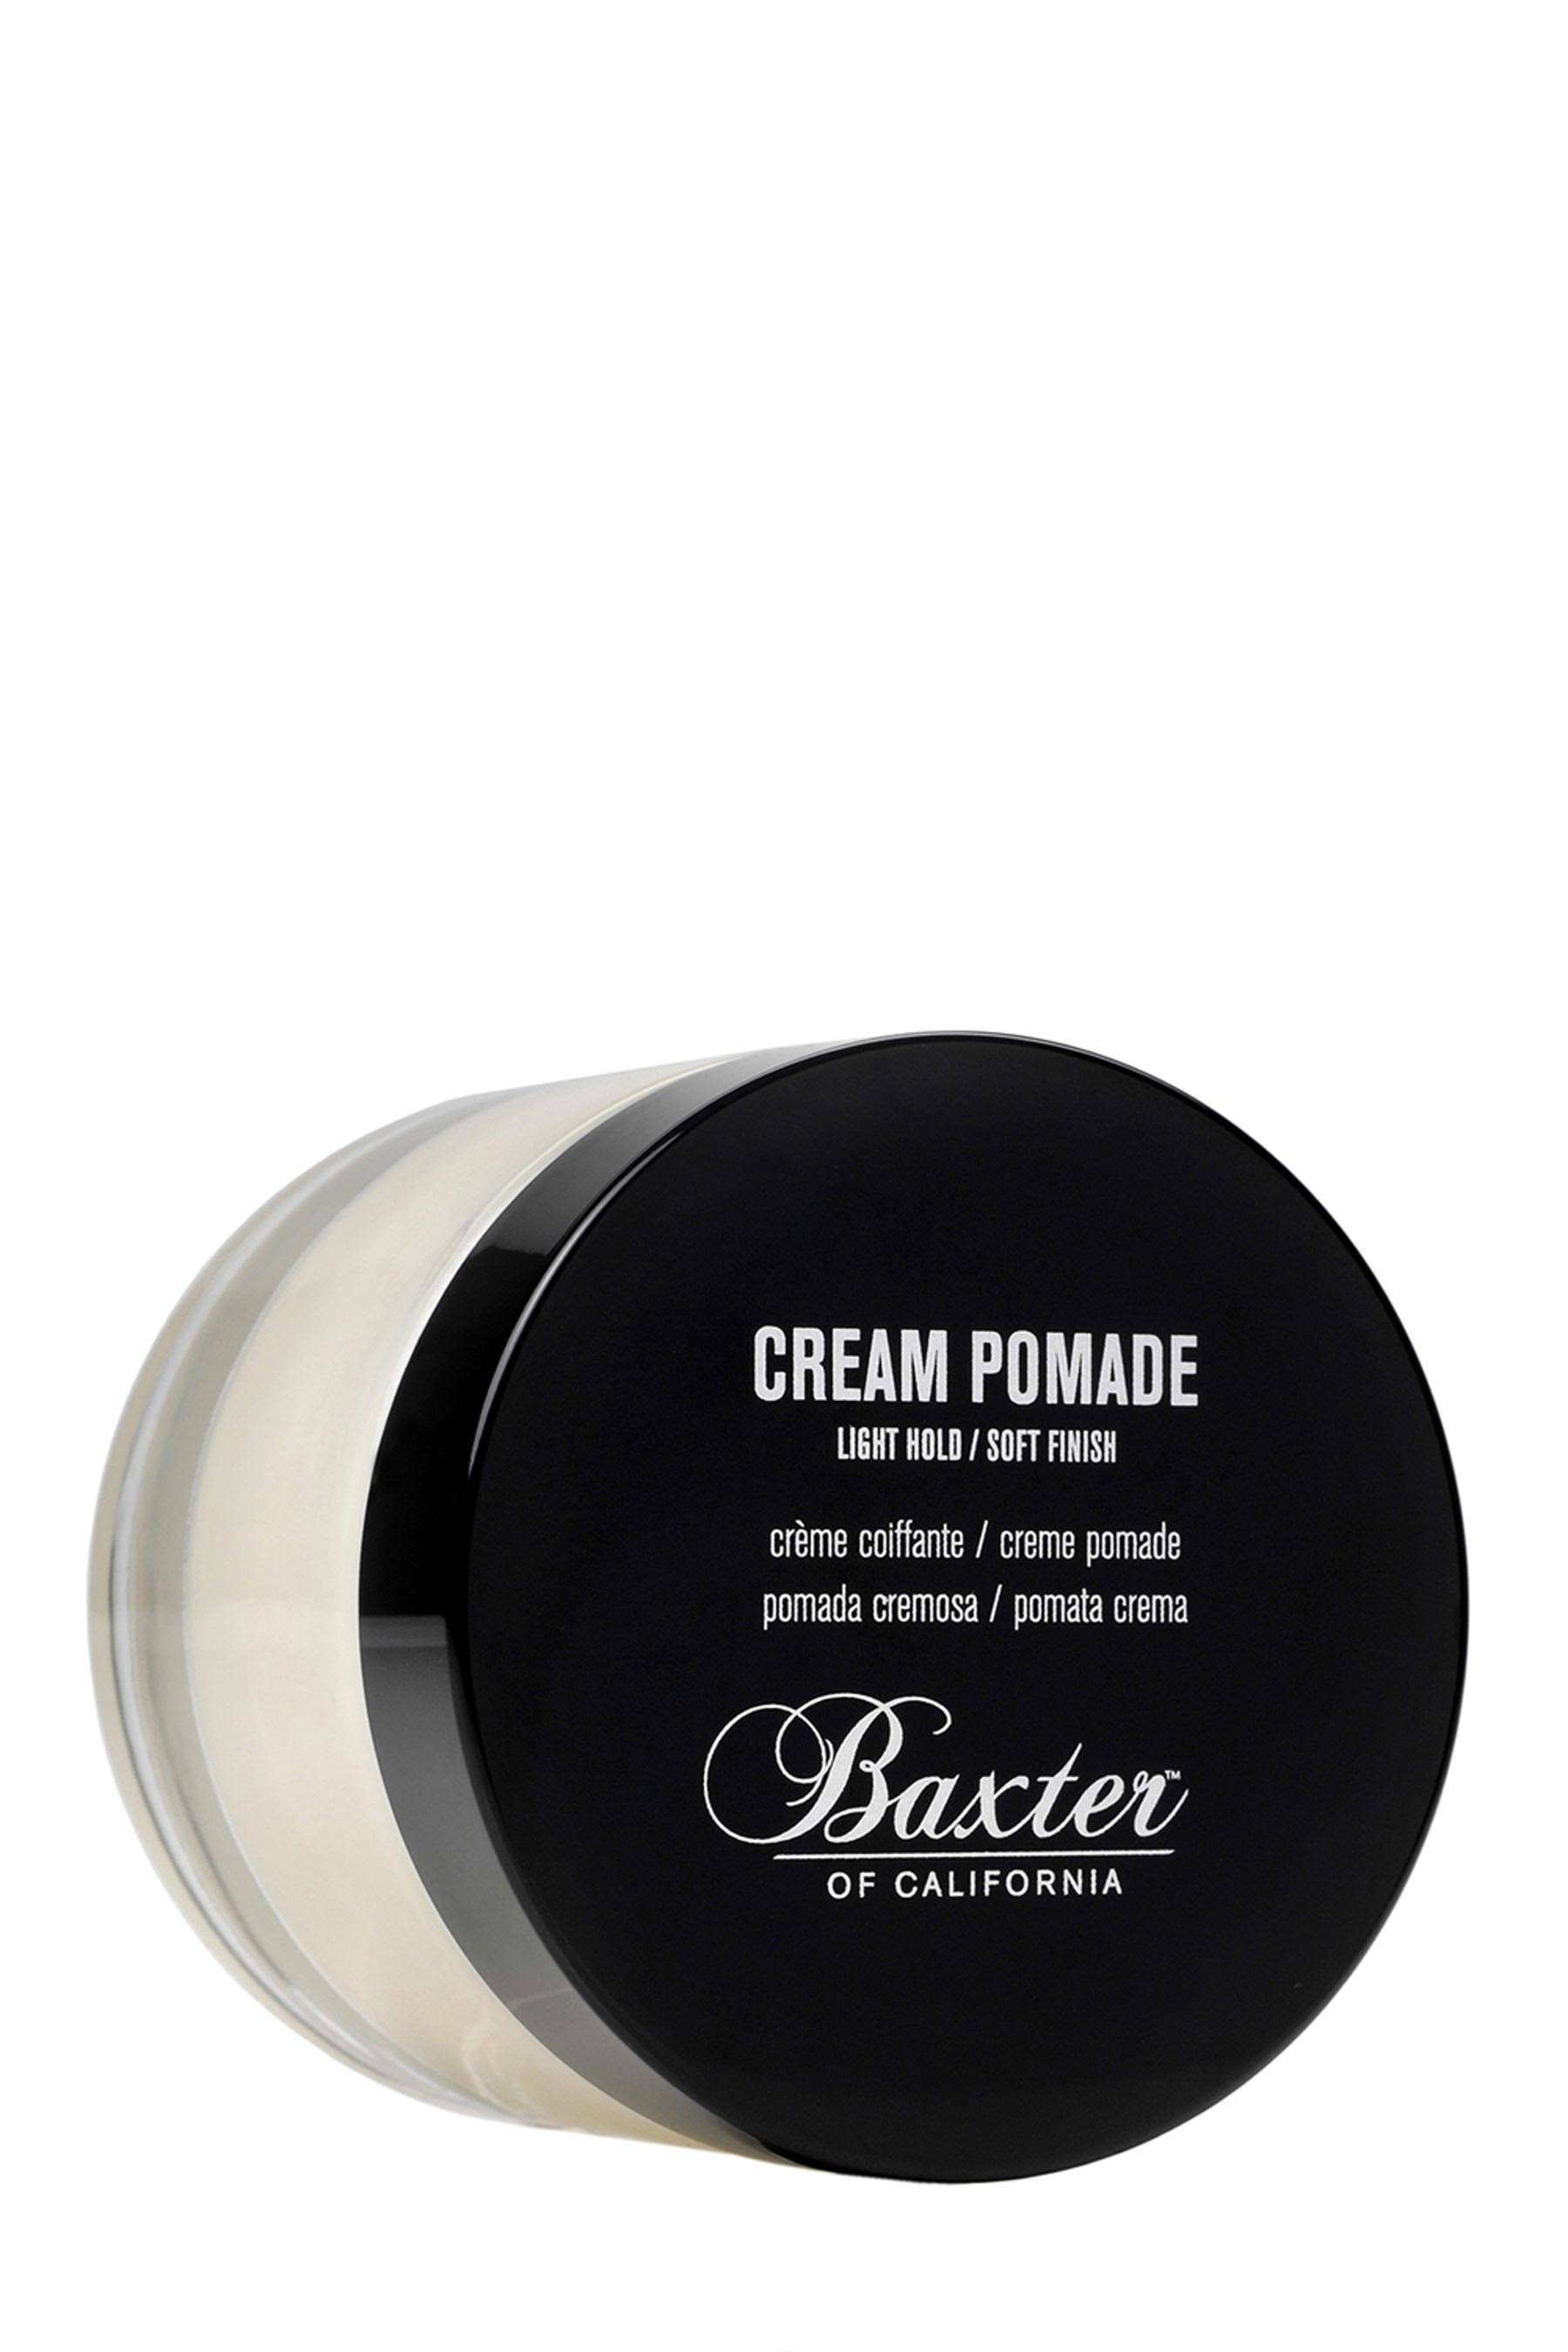 Baxter of California Cream Pomade - 2oz